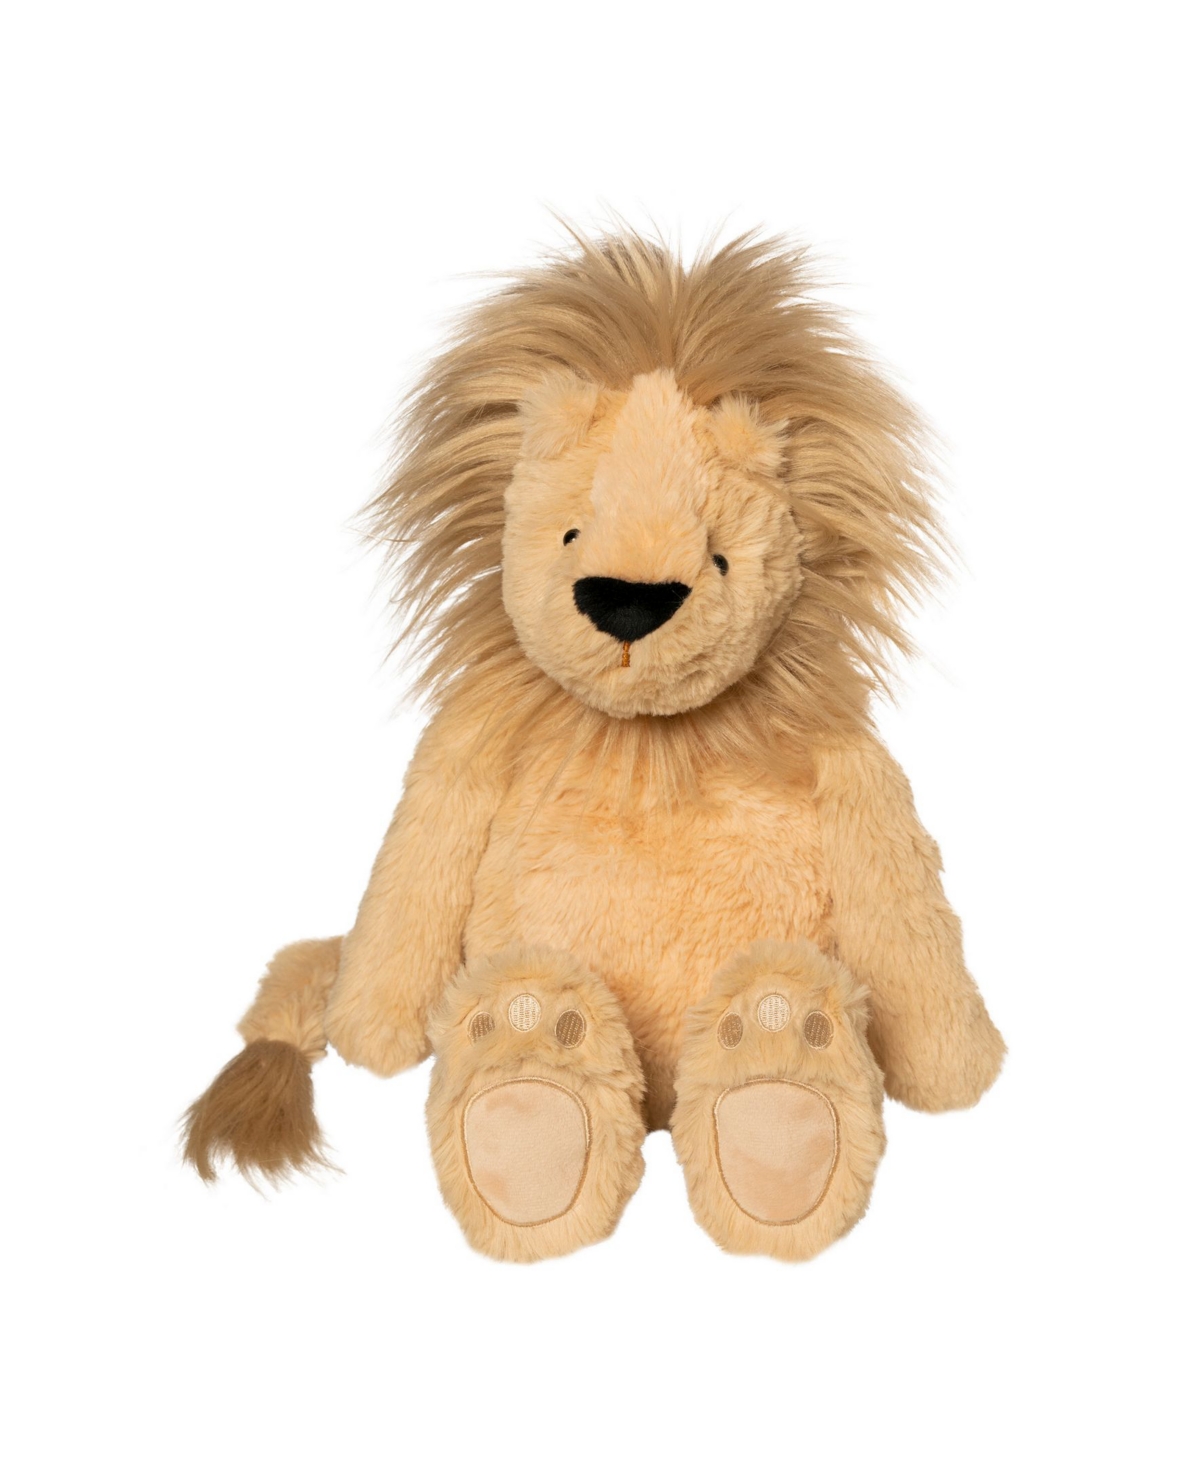 Manhattan Toy Company Charming Charlie Lion Stuffed Animal, 11.5" In Multi